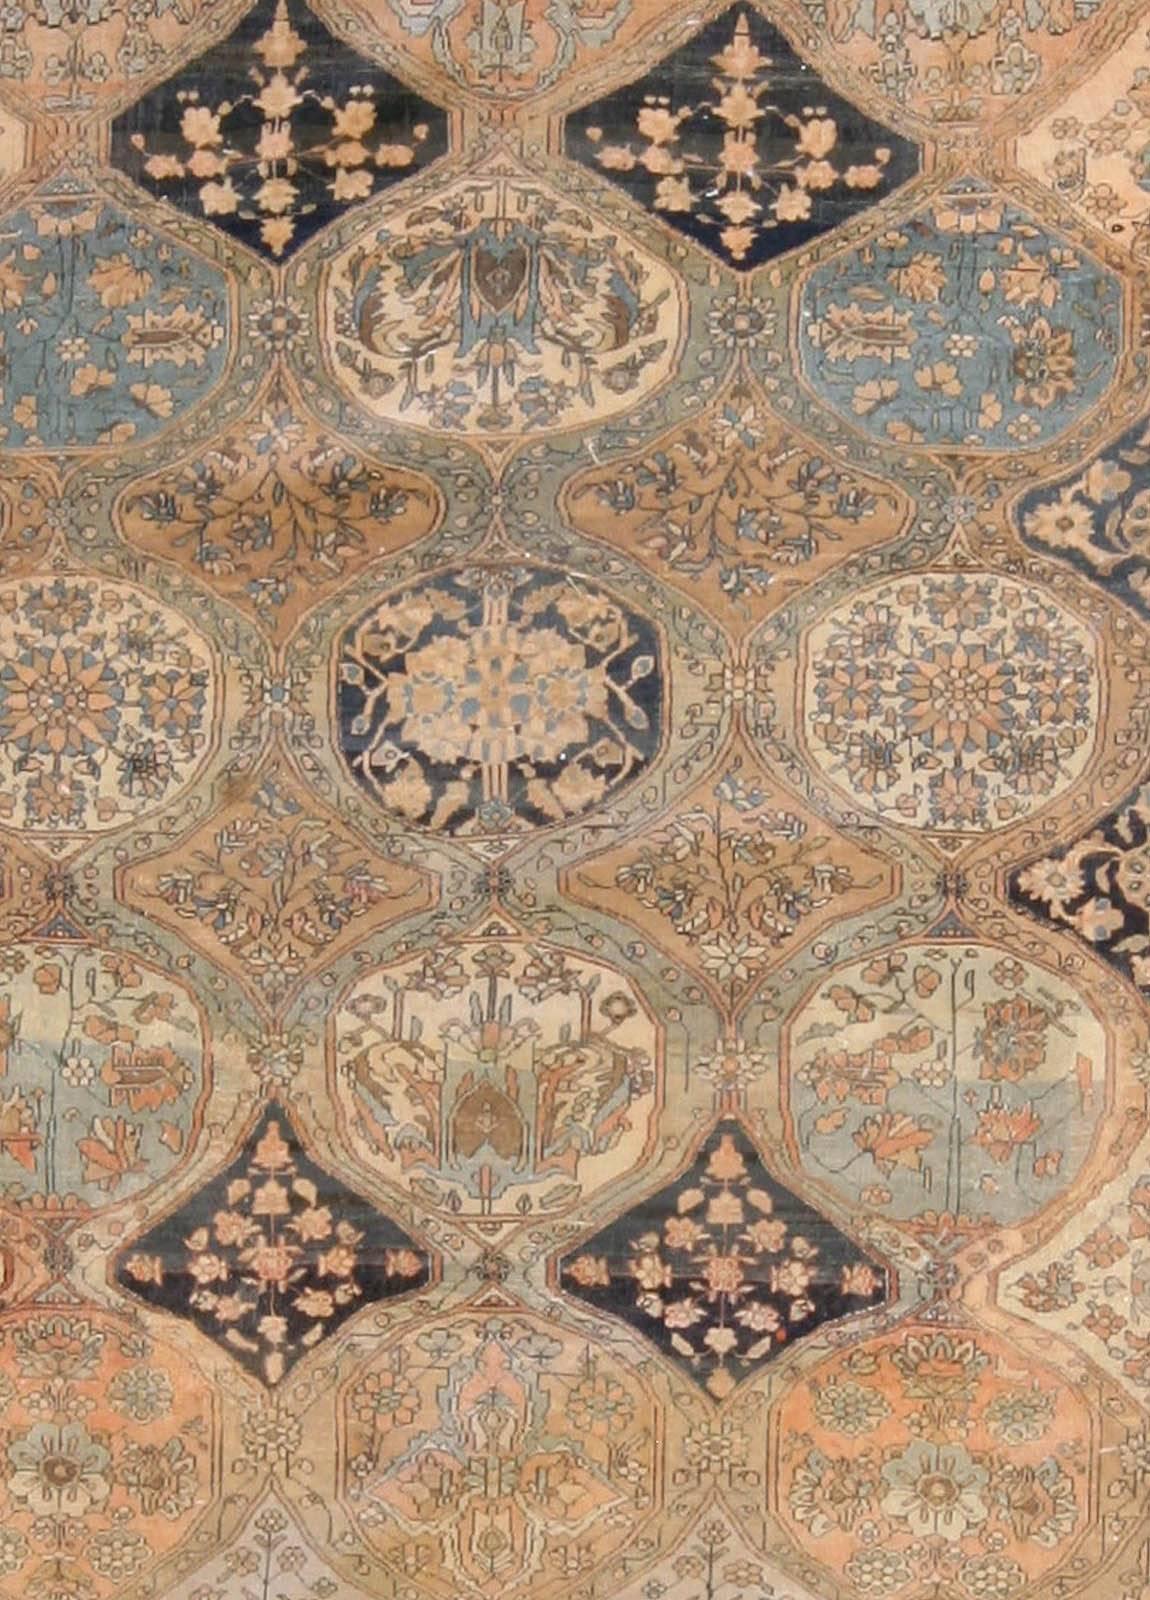 Authentic 19th Century Persian Kashan Handmade Wool Rug
Size: 10'2